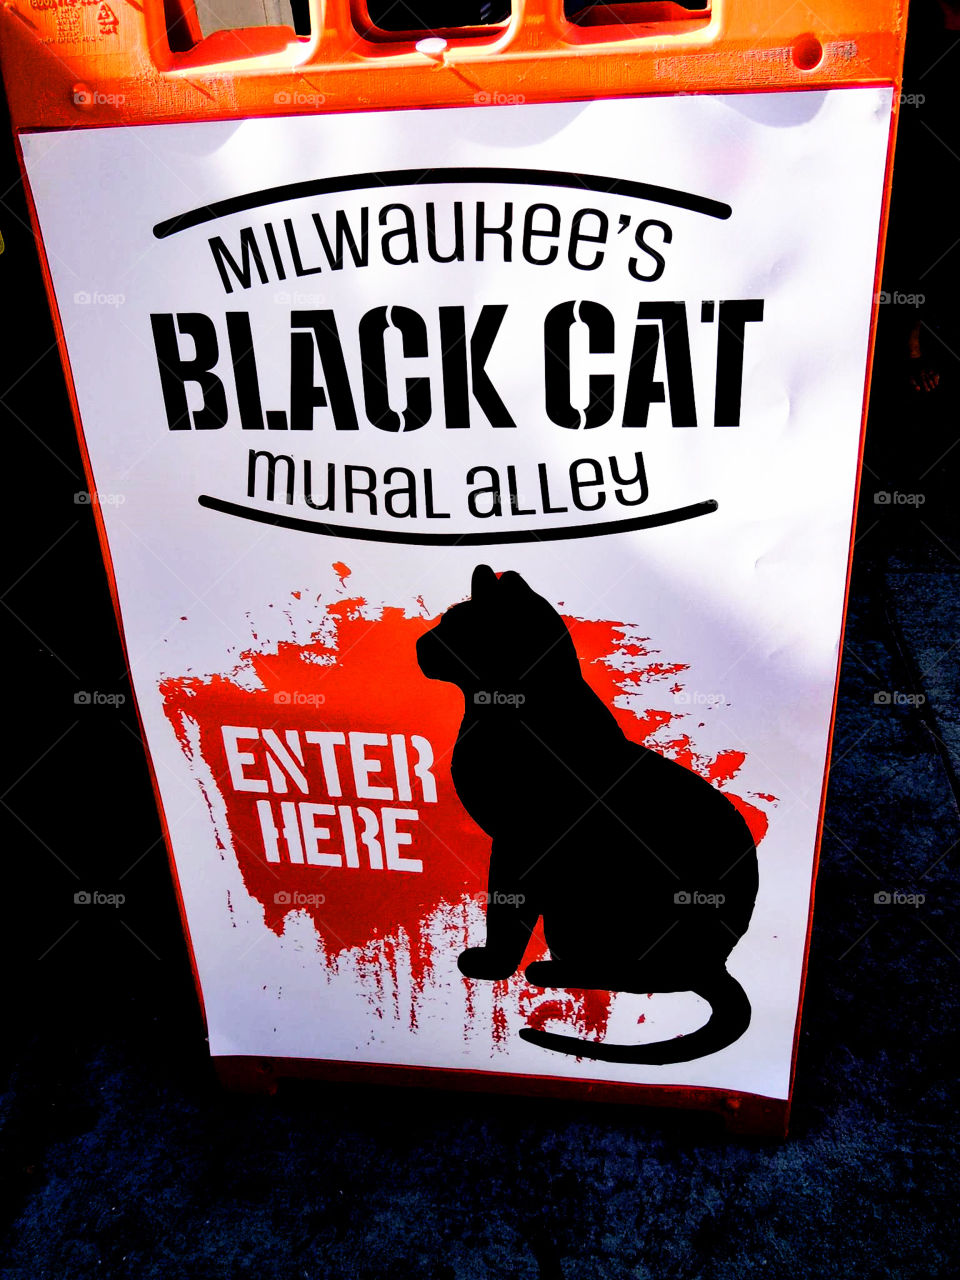 Black Cat Alley, Milwaukee Wisconsin